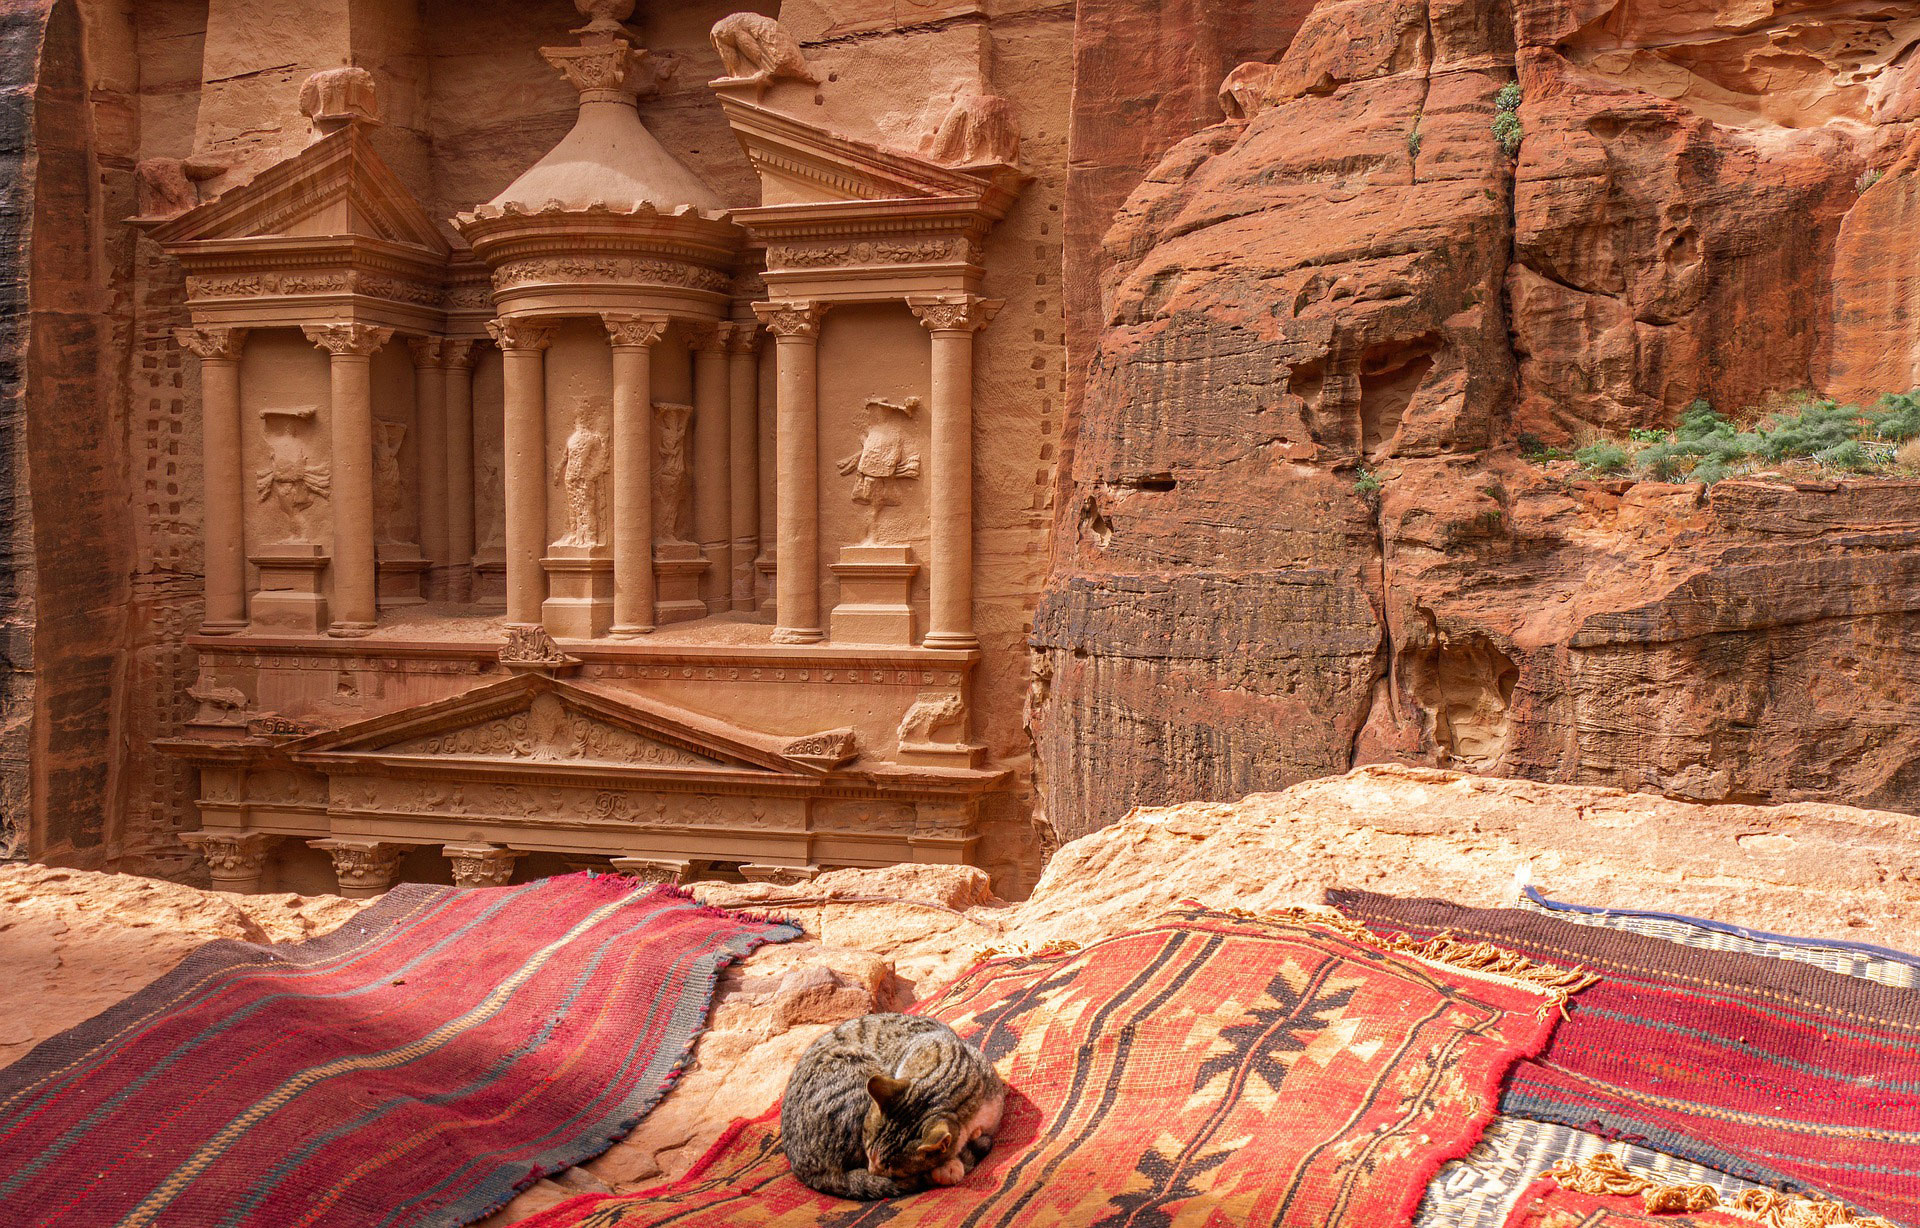 Petra - UNESCO World Heritage Centre